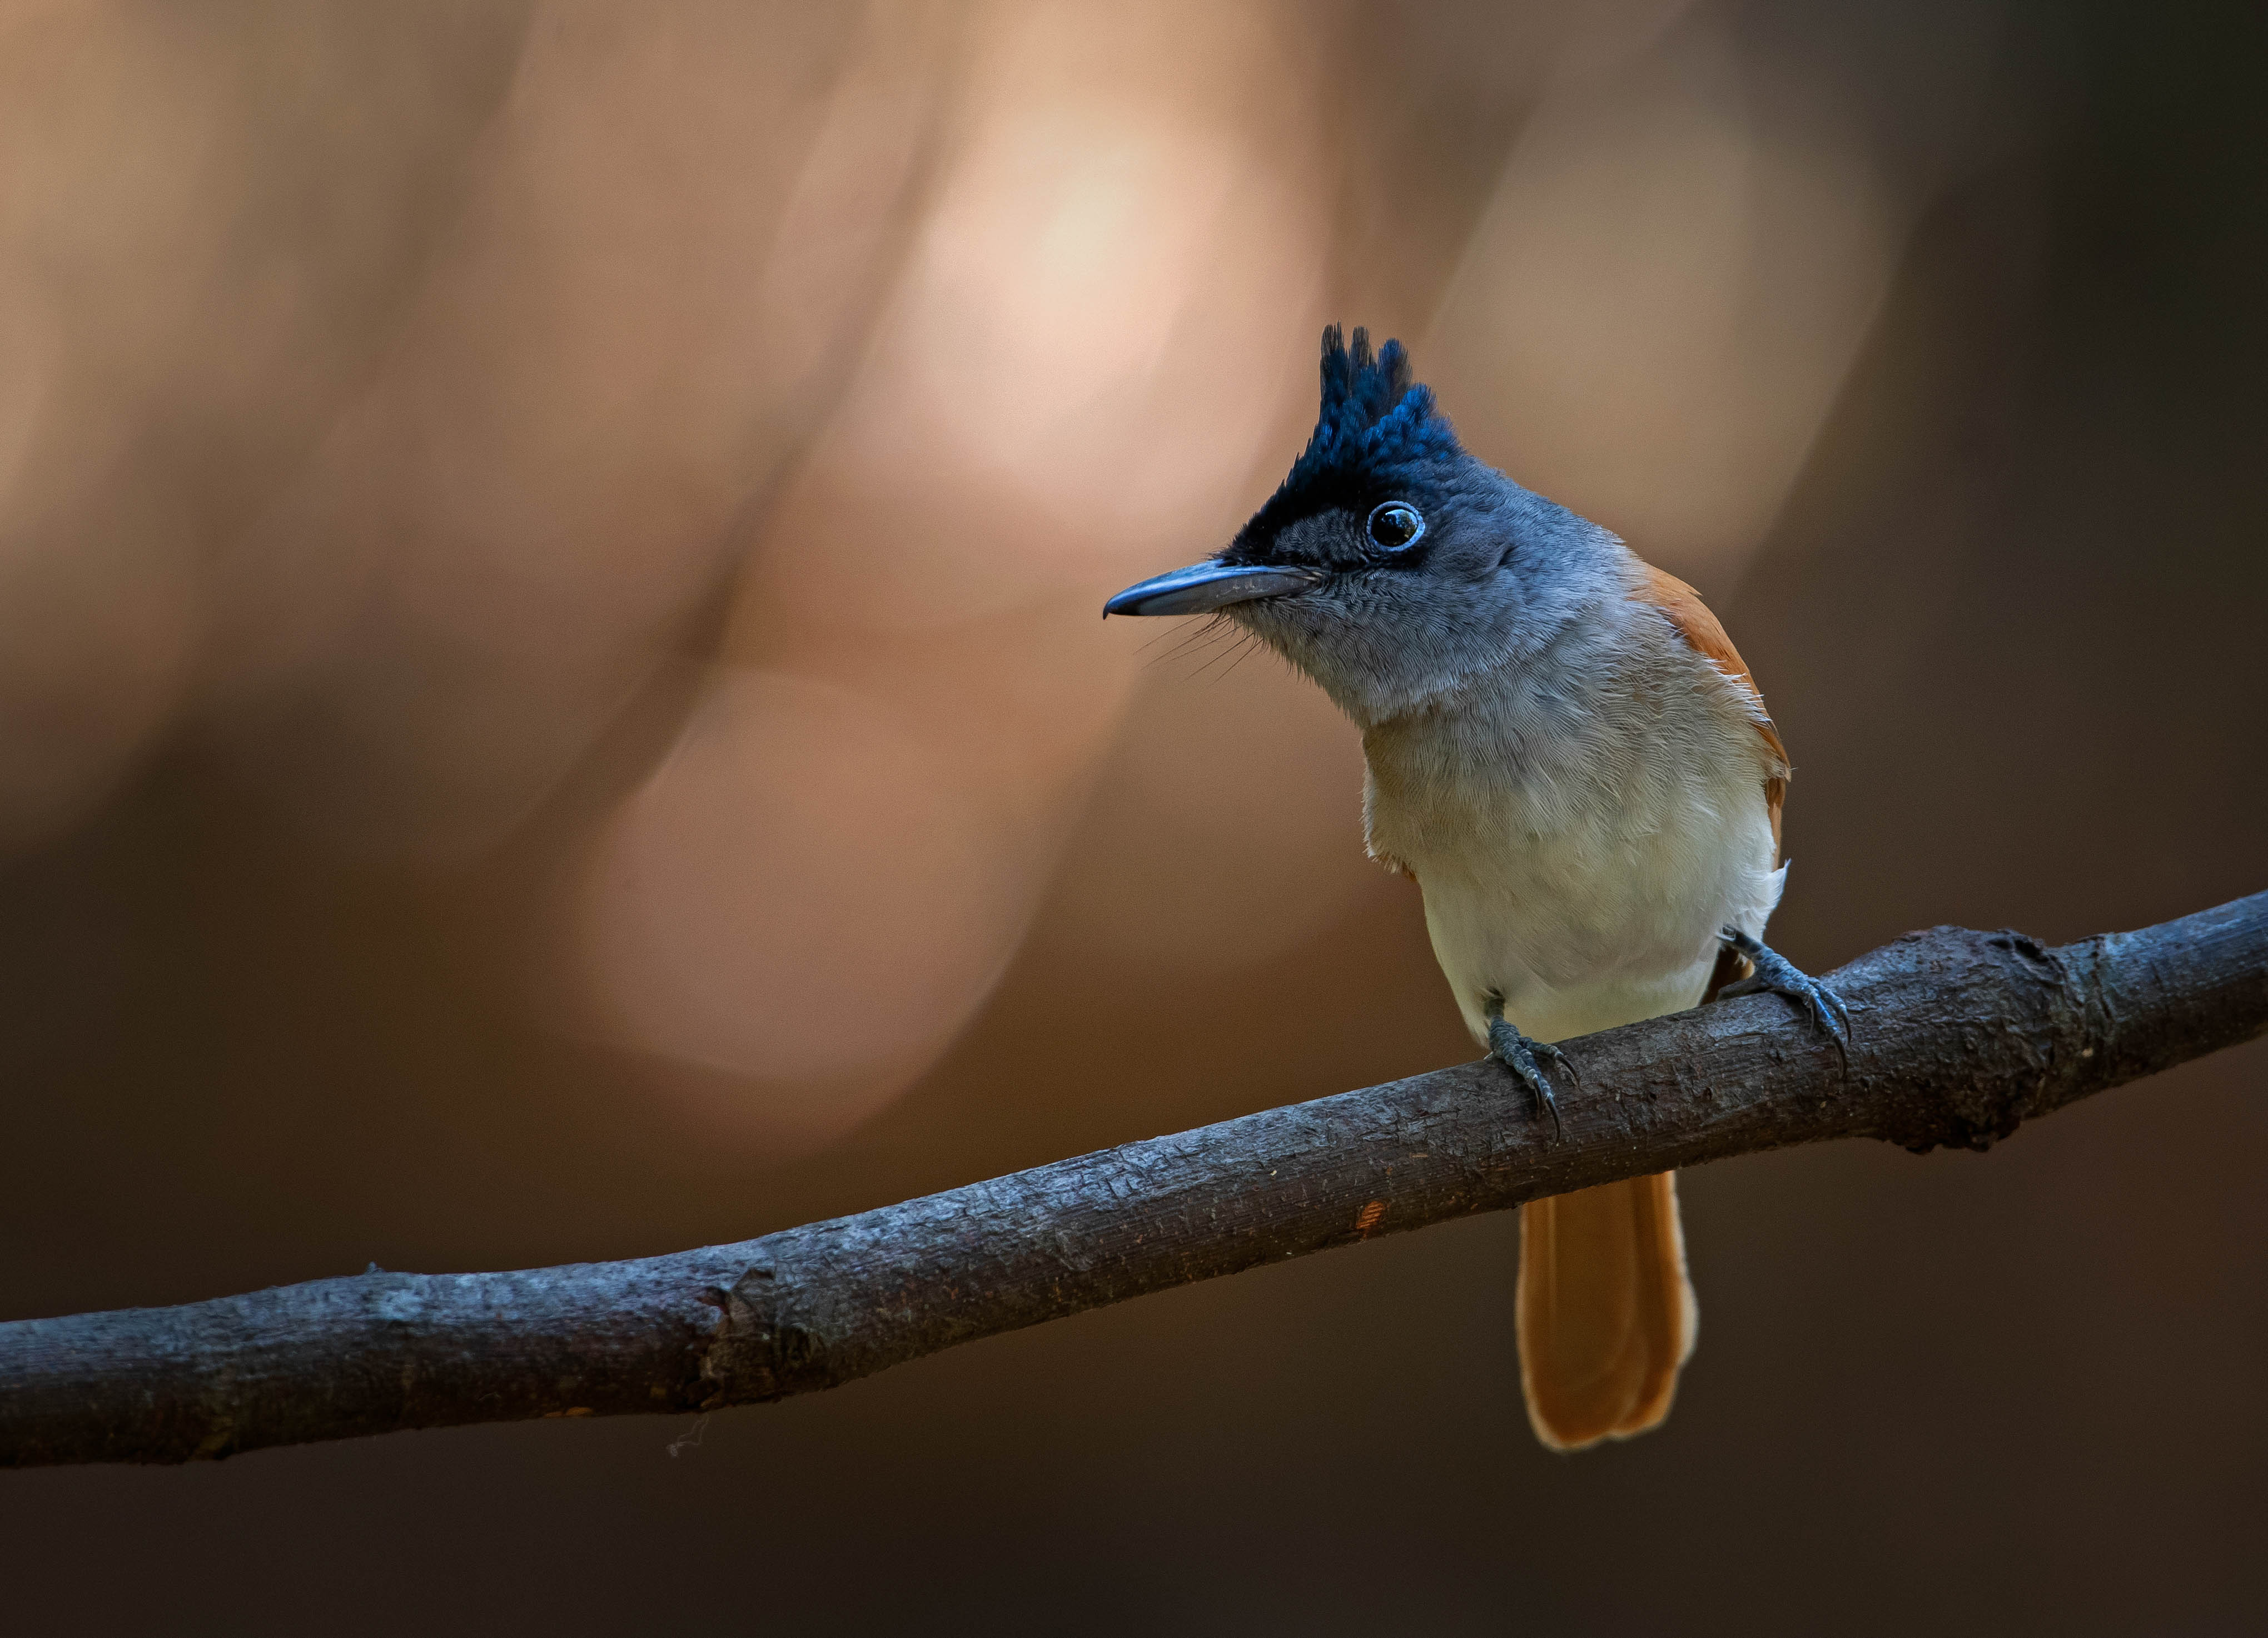 Tamhini: Forest Birding (Hide Photography)